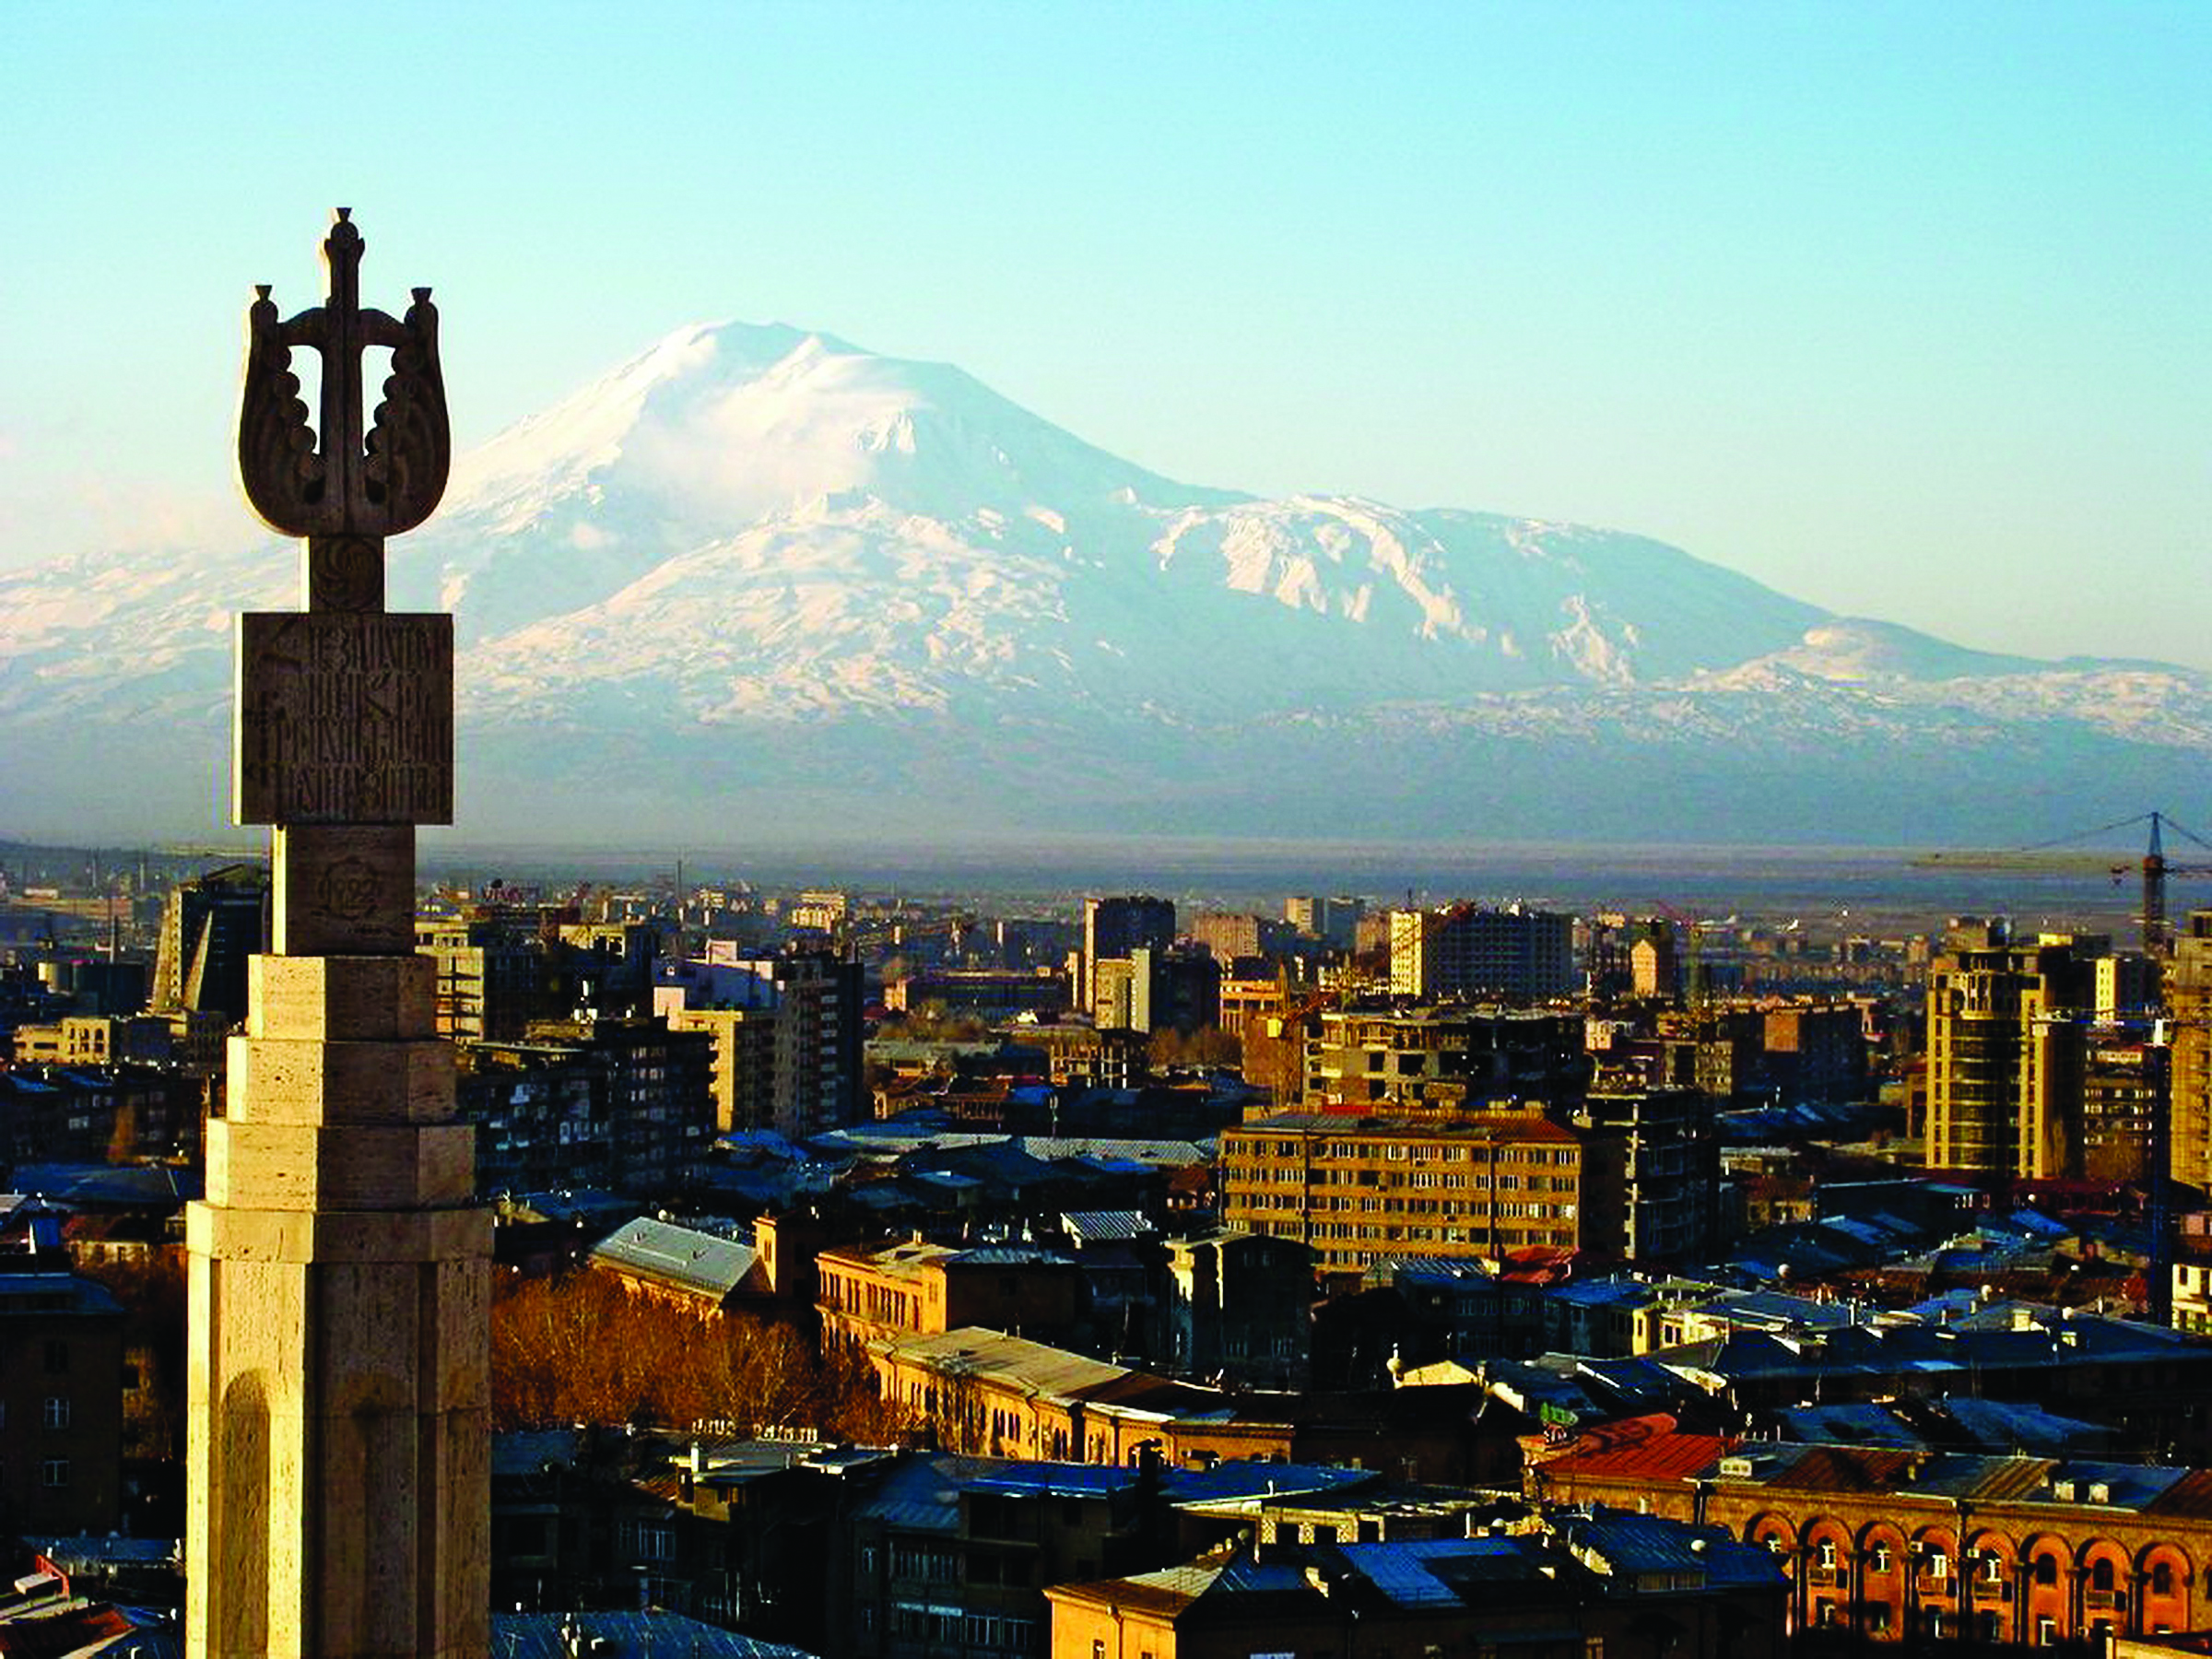 Армения крутое